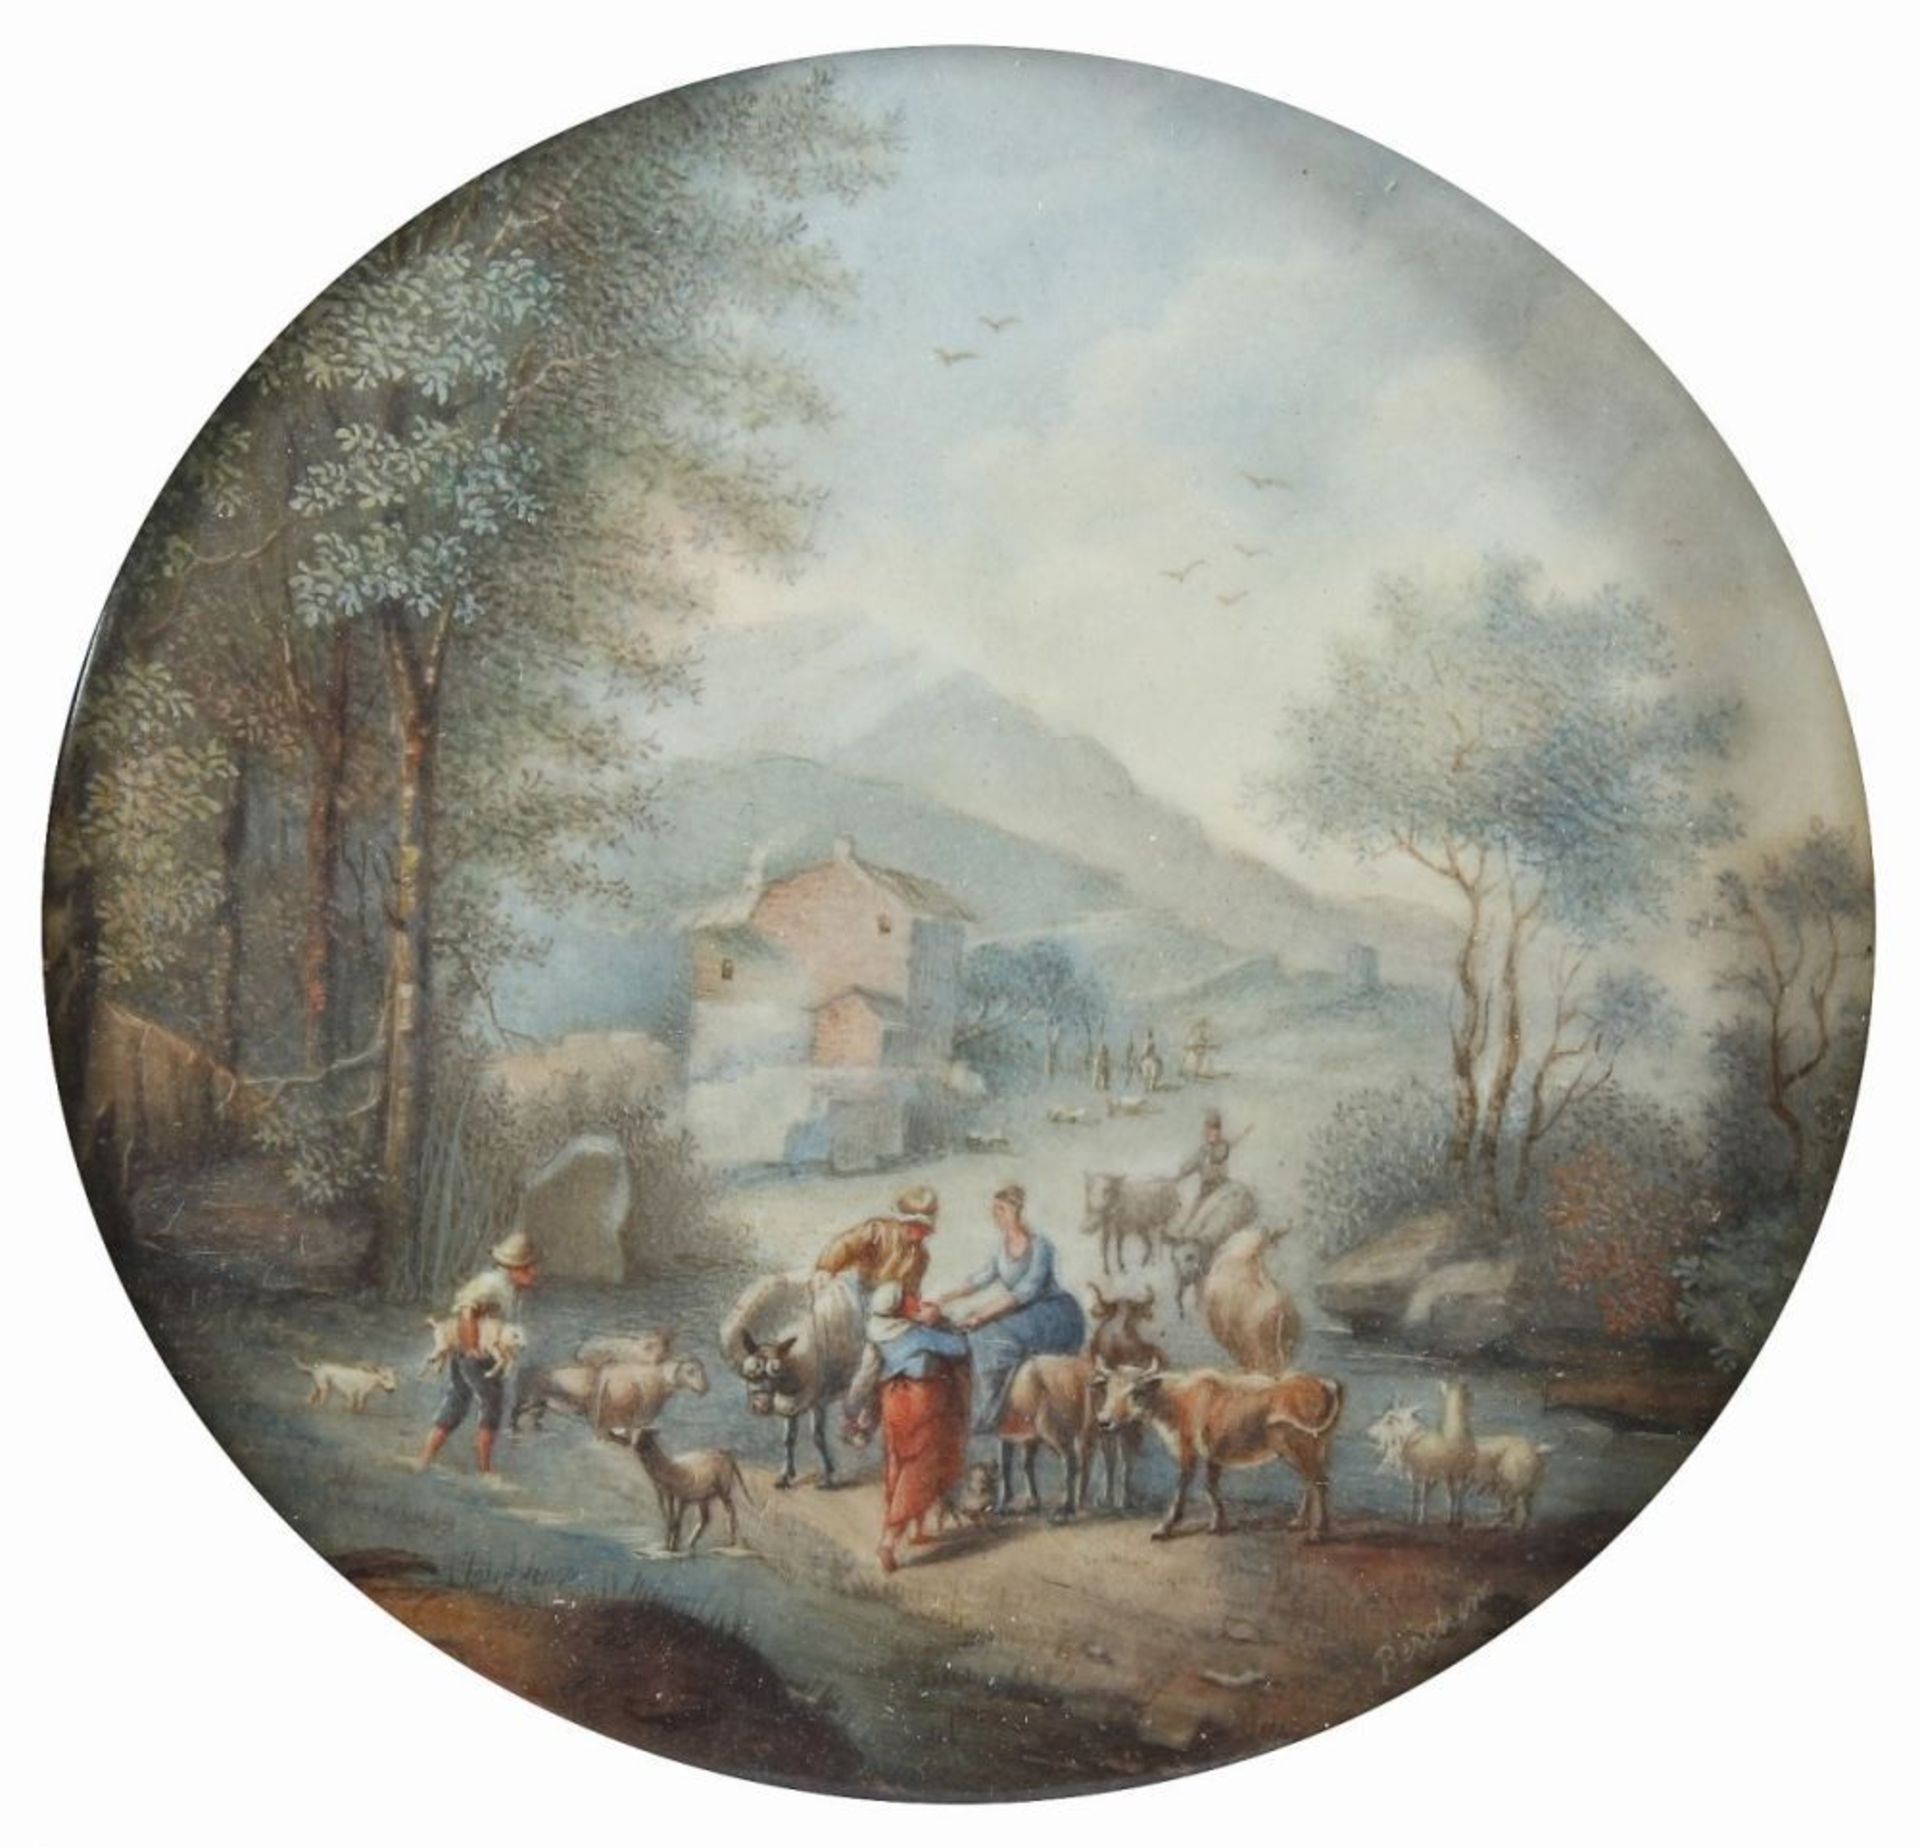 MINIATUR, "Landschaft mit Viehhirten", farbige Malerei/Papier, Dm 9, unten rechts bez. "Berchem",